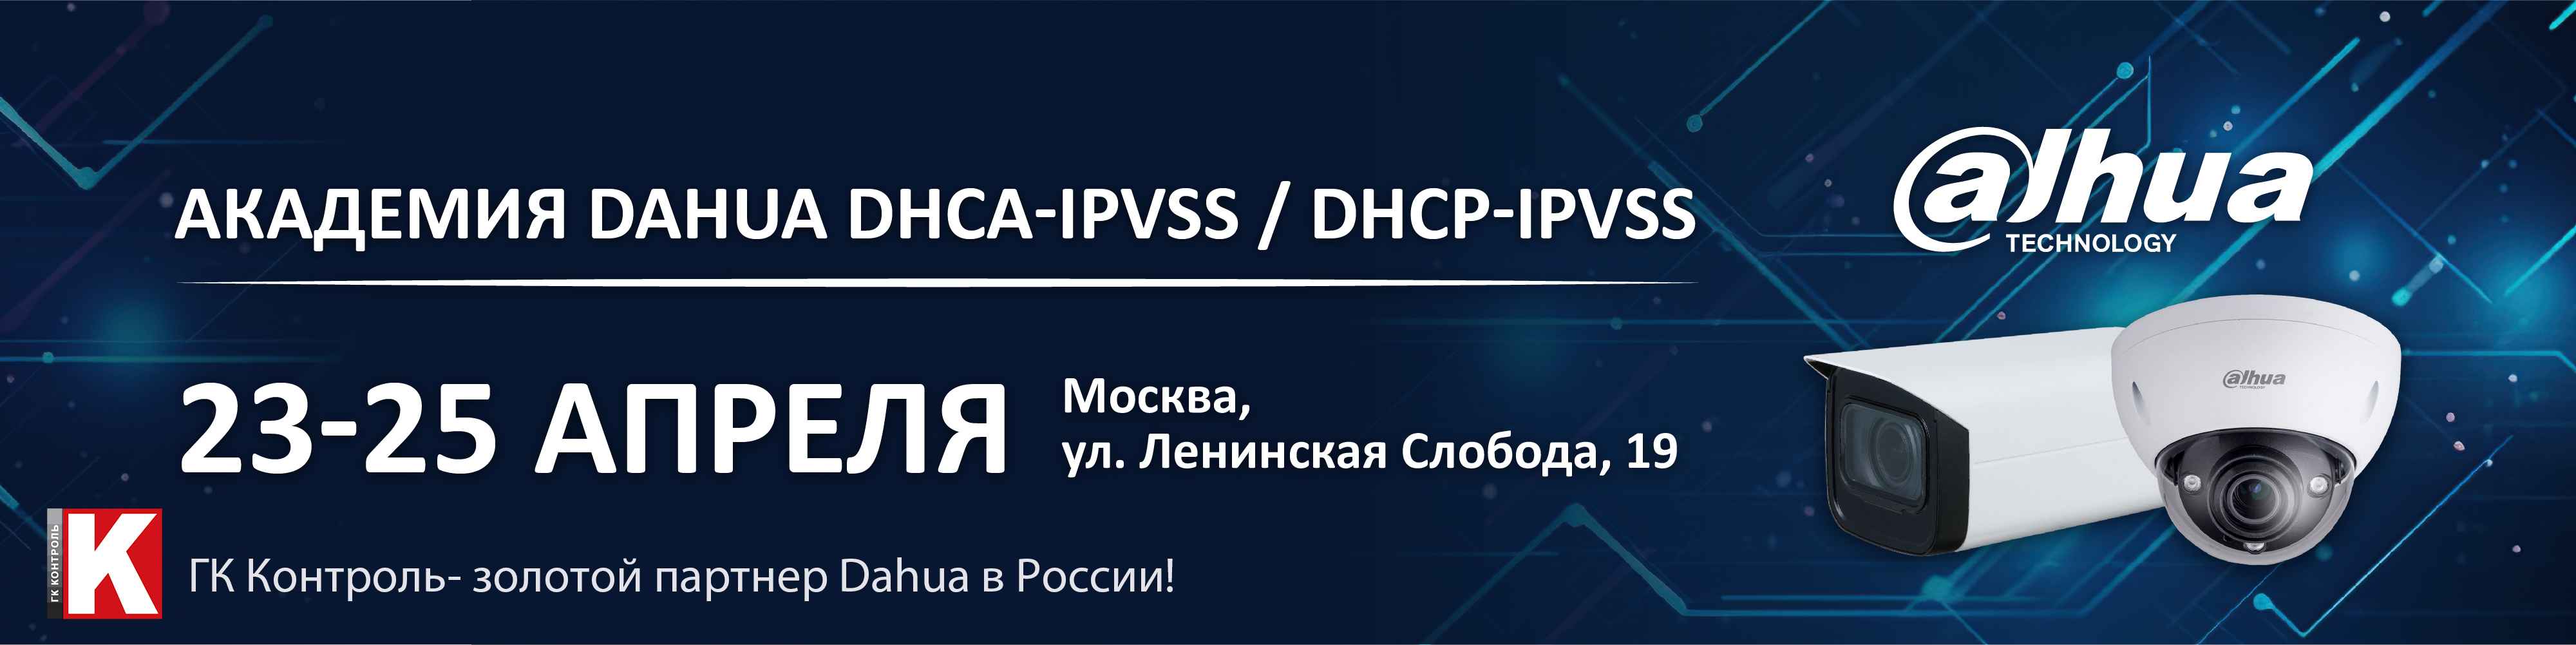 Академия Dahua DHCA-IPVSS / DHCP-IPVSS 23-25 апреля